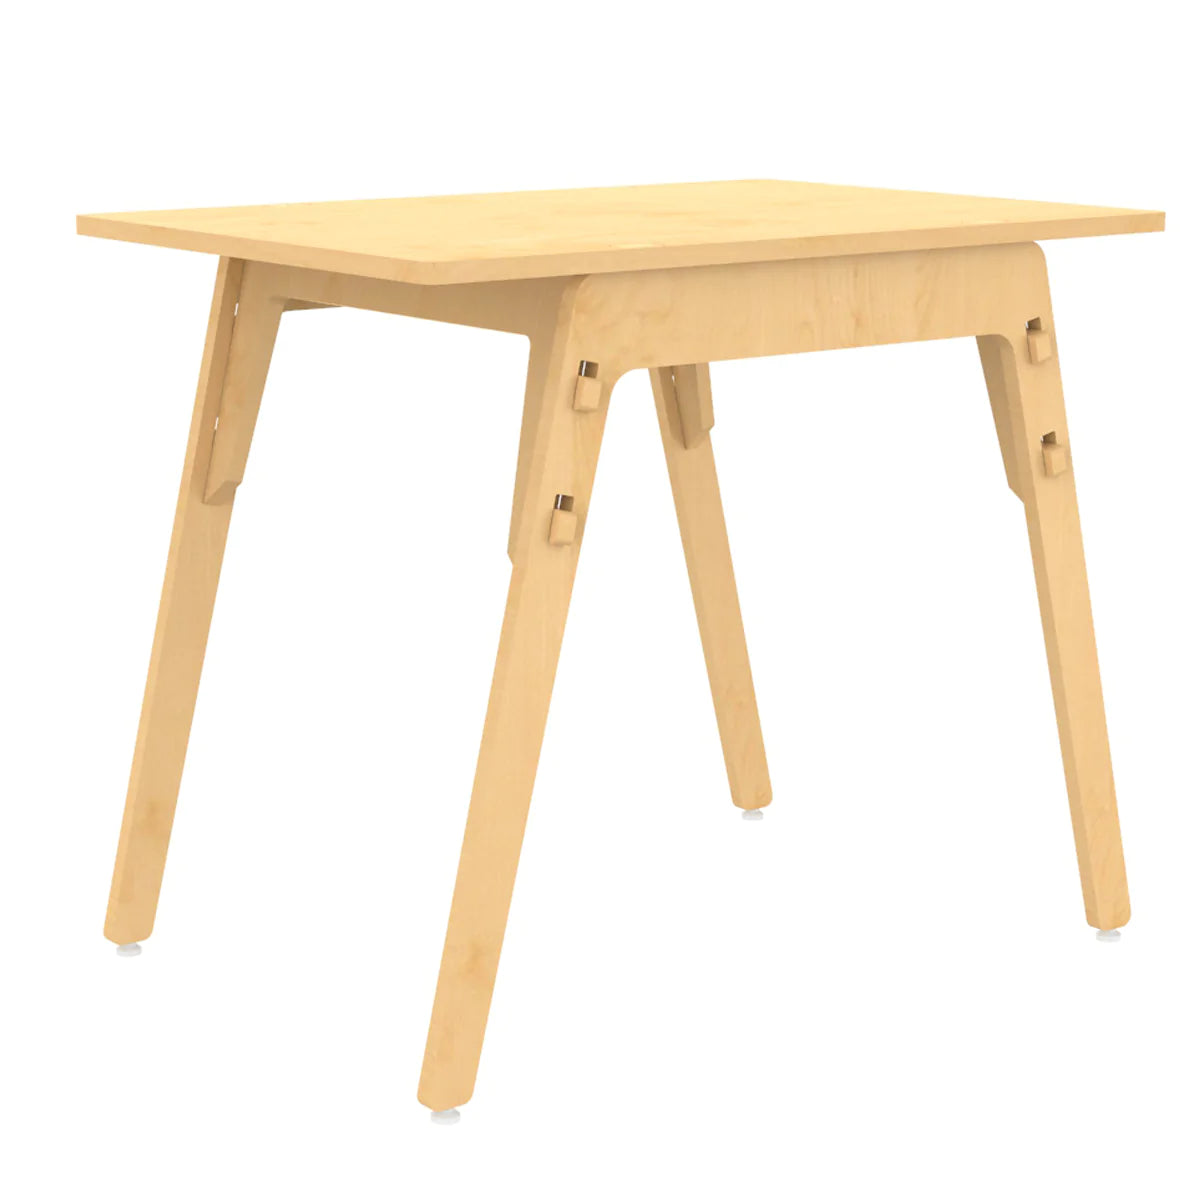 Buy Black Kiwi Wooden Table - Natural - Side View - SkilloToys.com